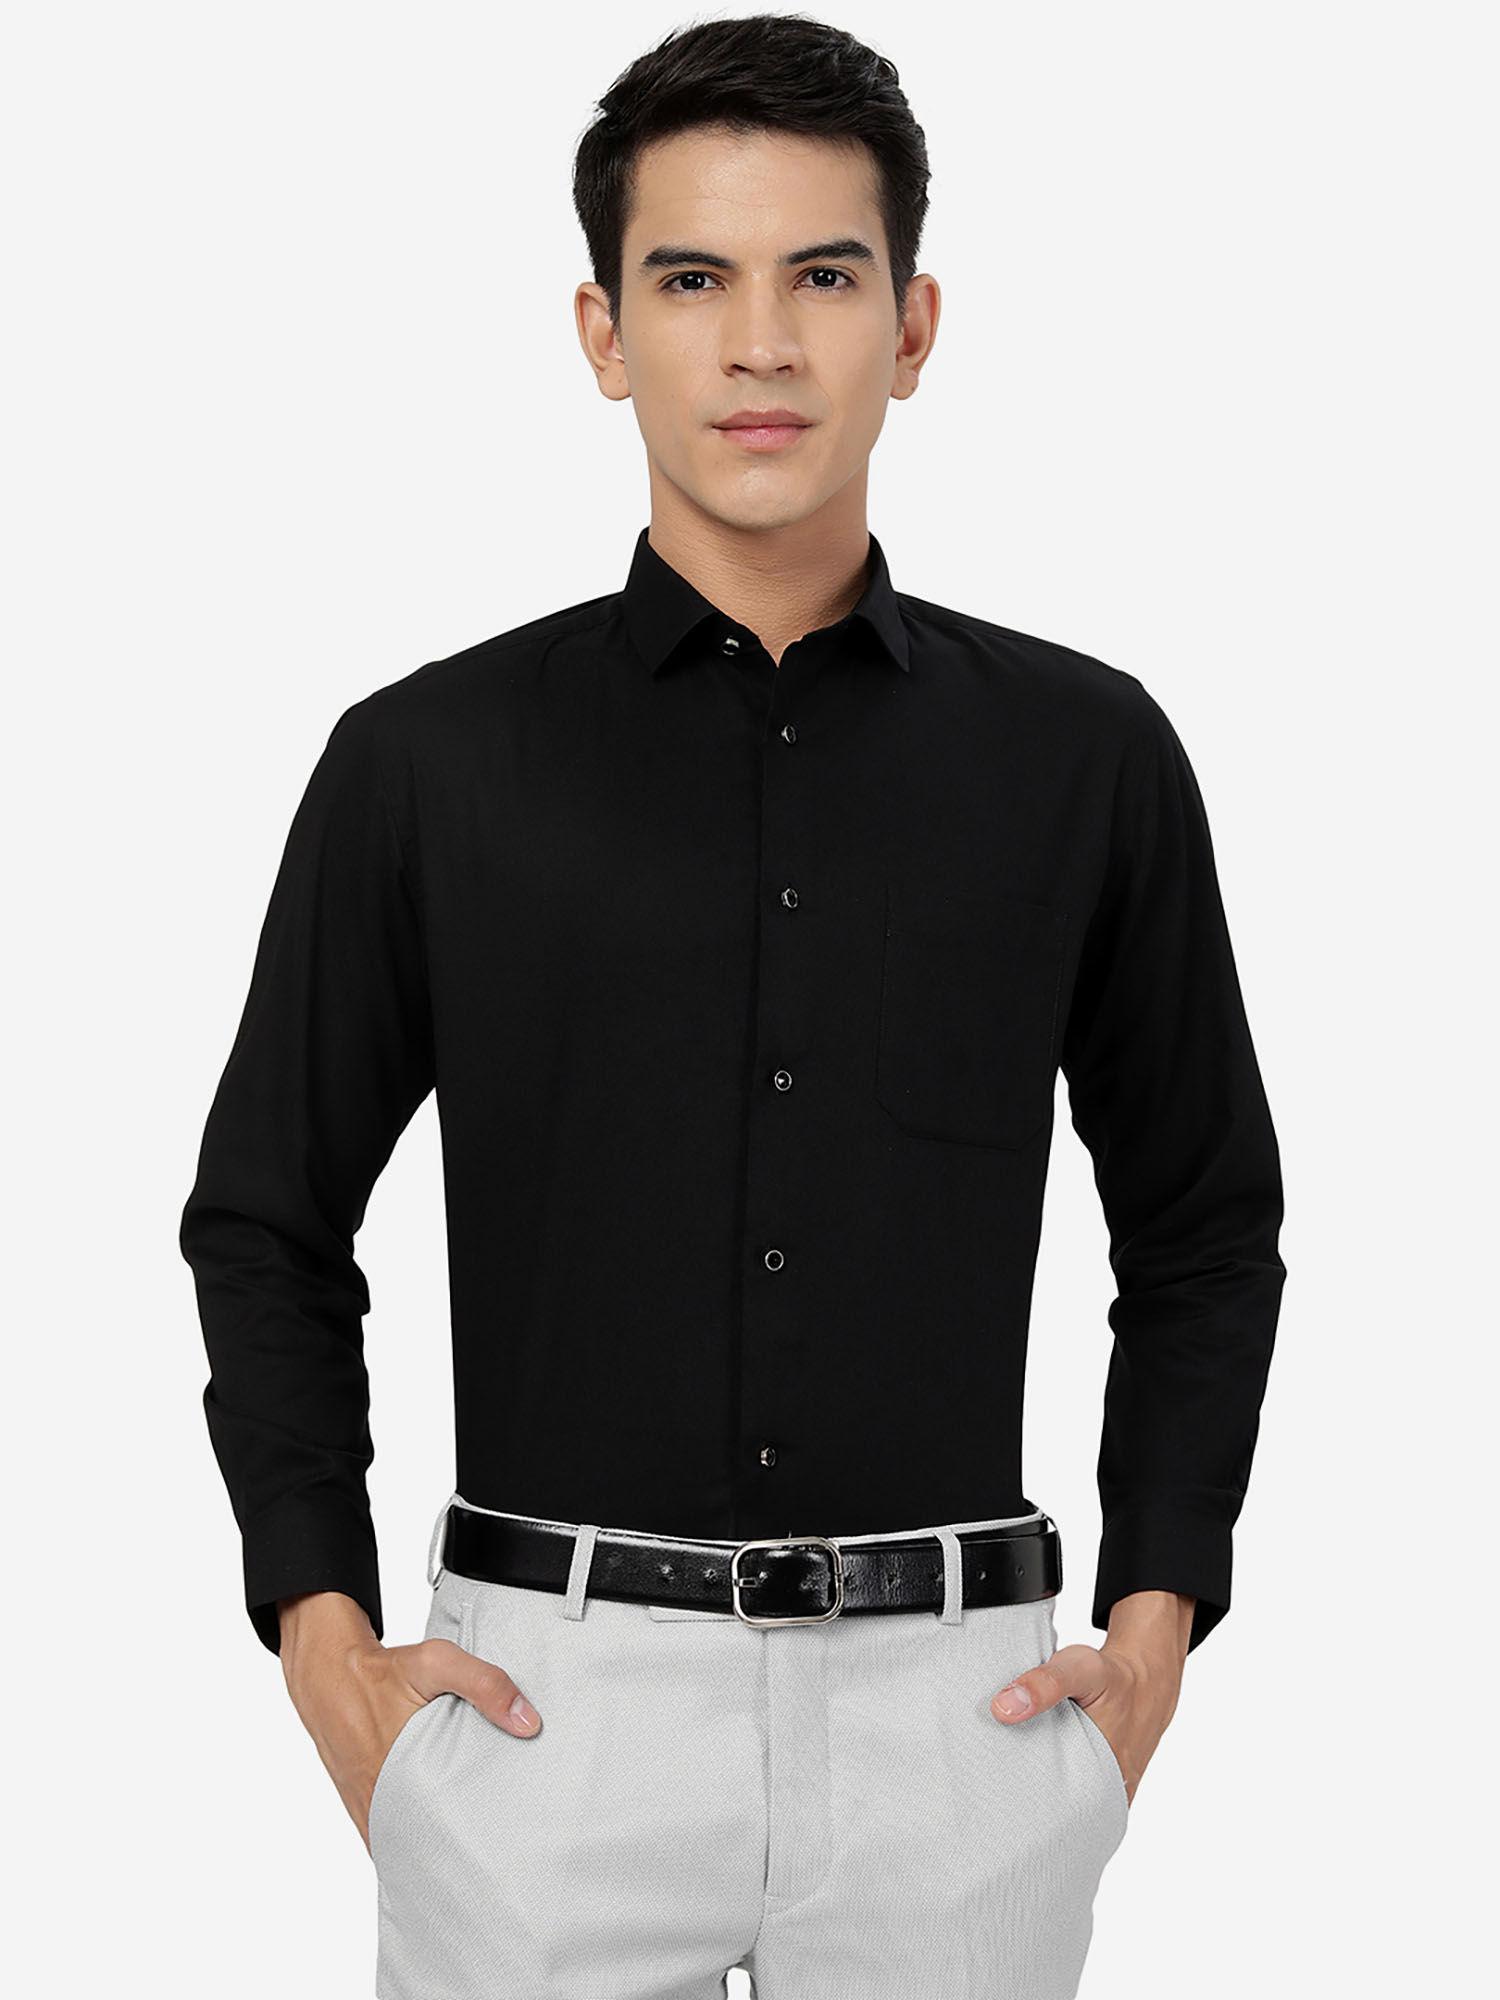 mens black 100% cotton slim fit solid party wear shirt